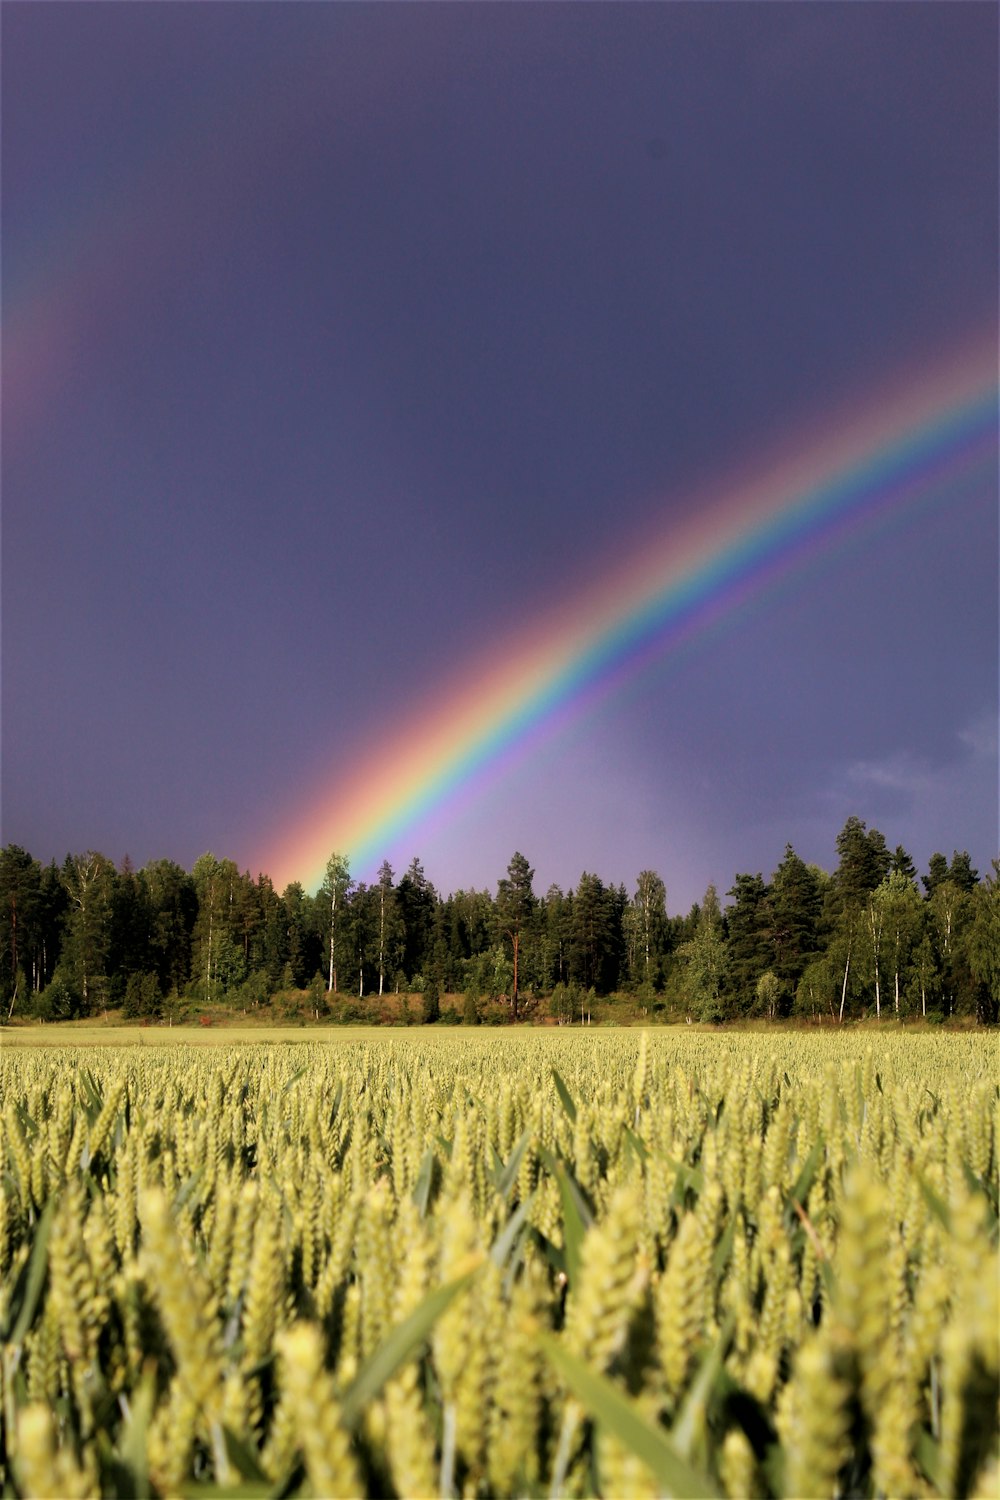 green grass field with rainbow